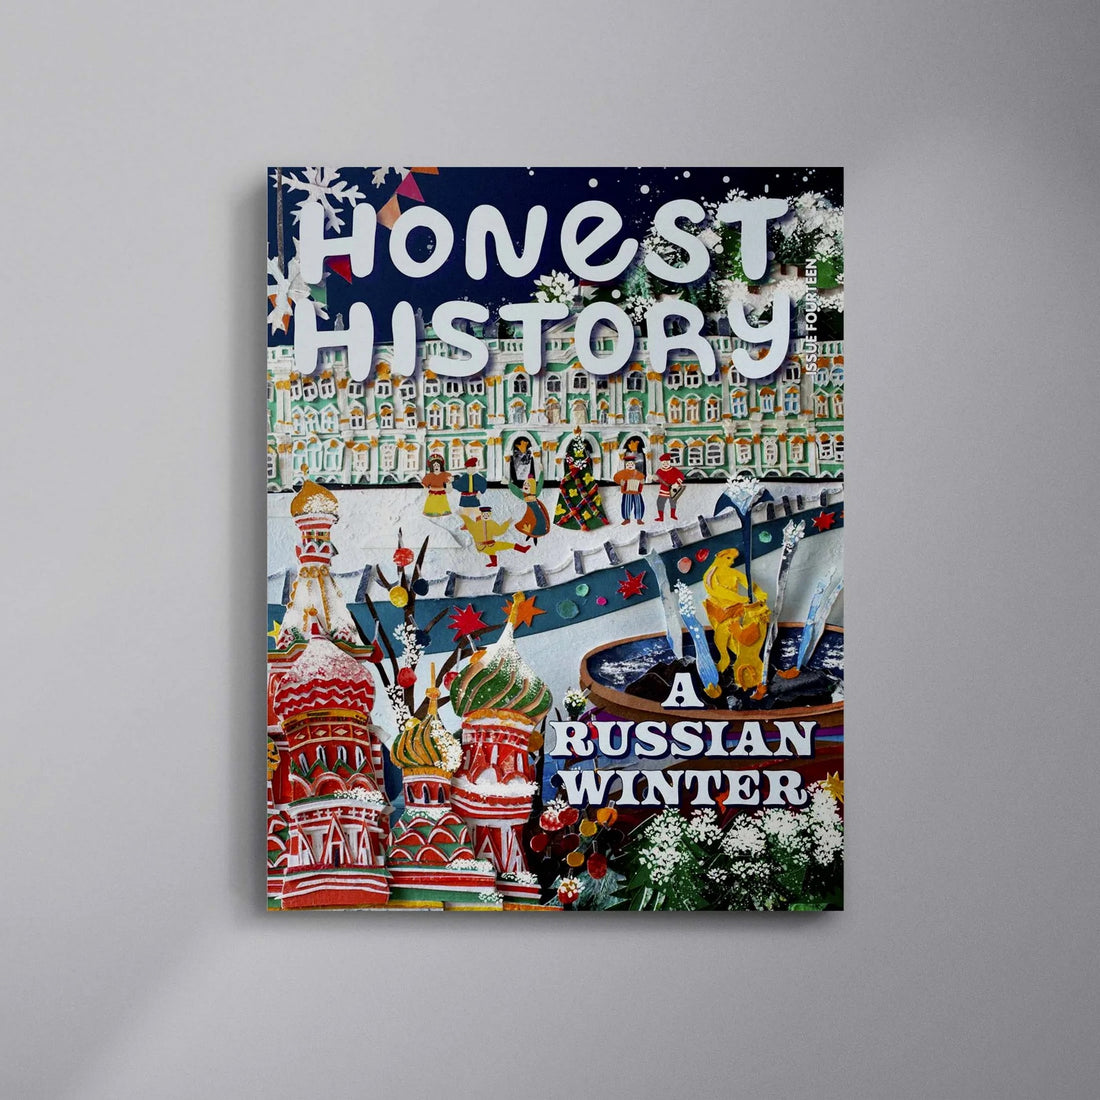 Honest History - Issue 14 - Parkette.